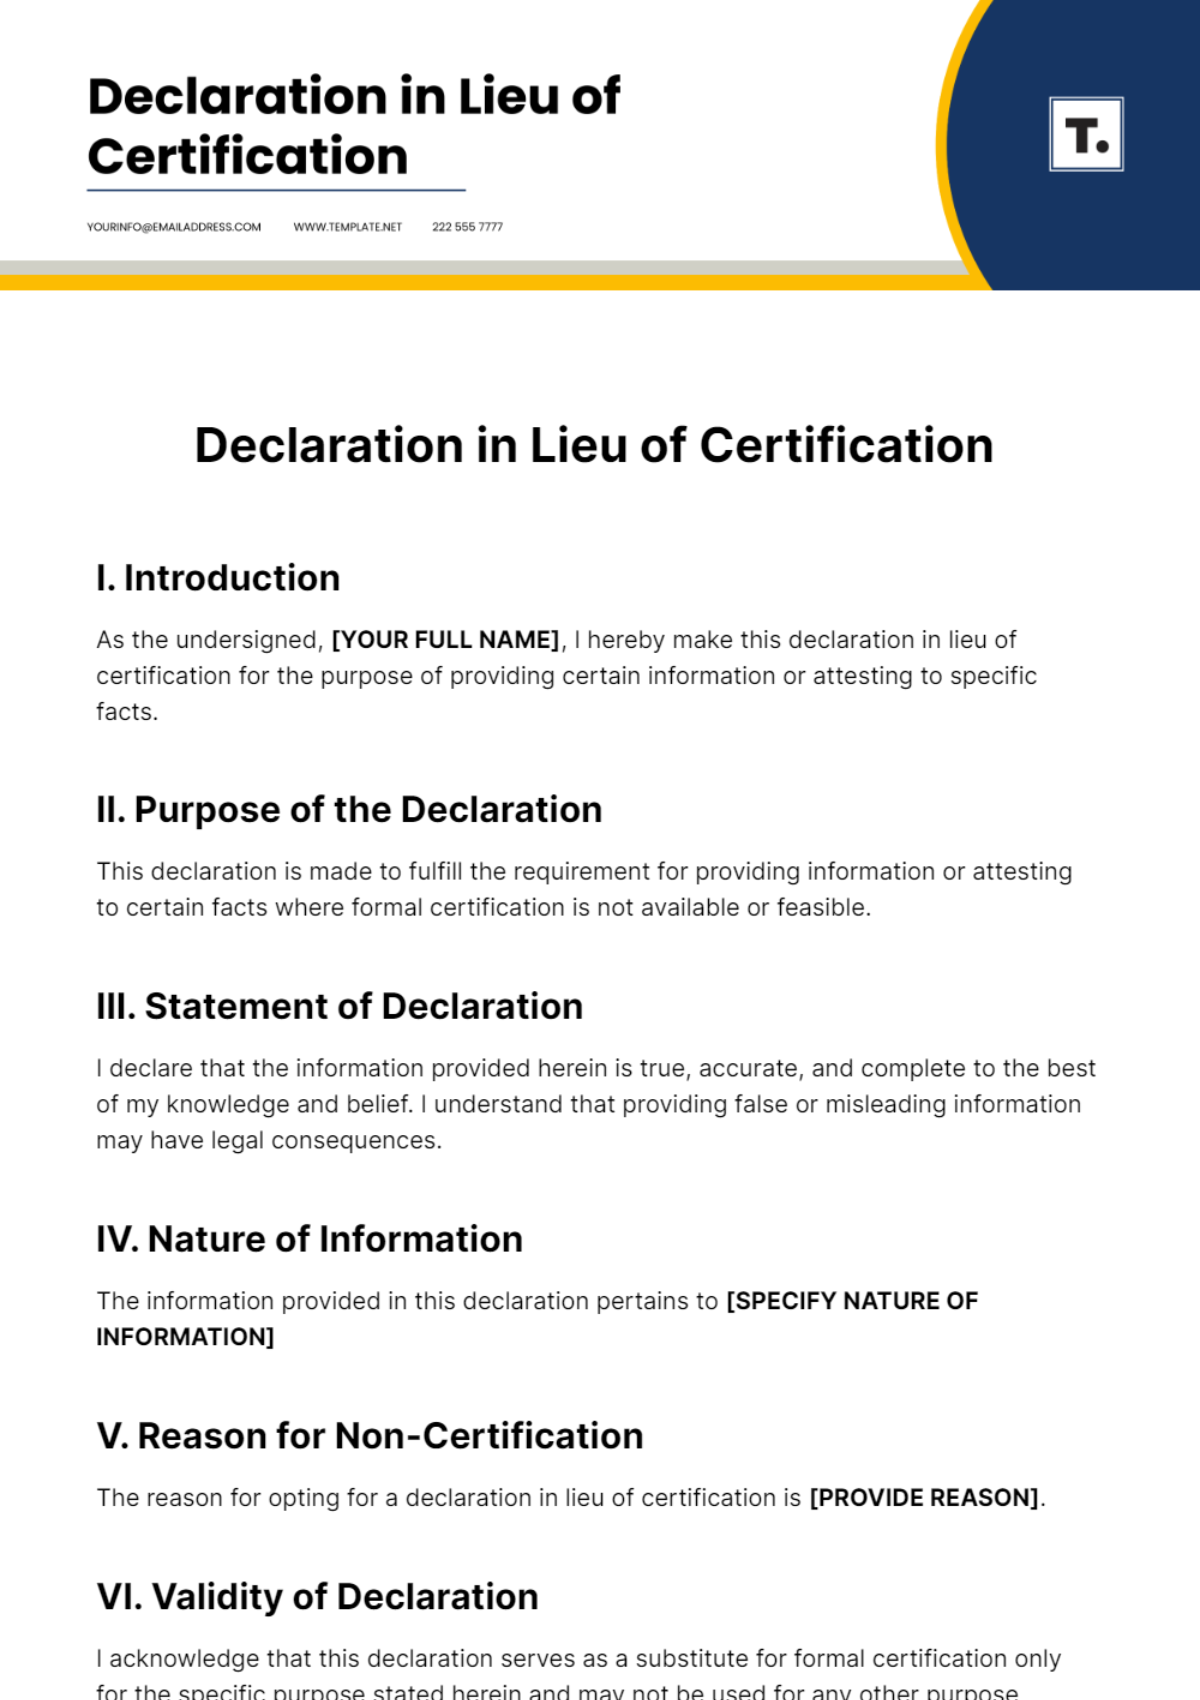 Free Declaration in Lieu of Certification Template